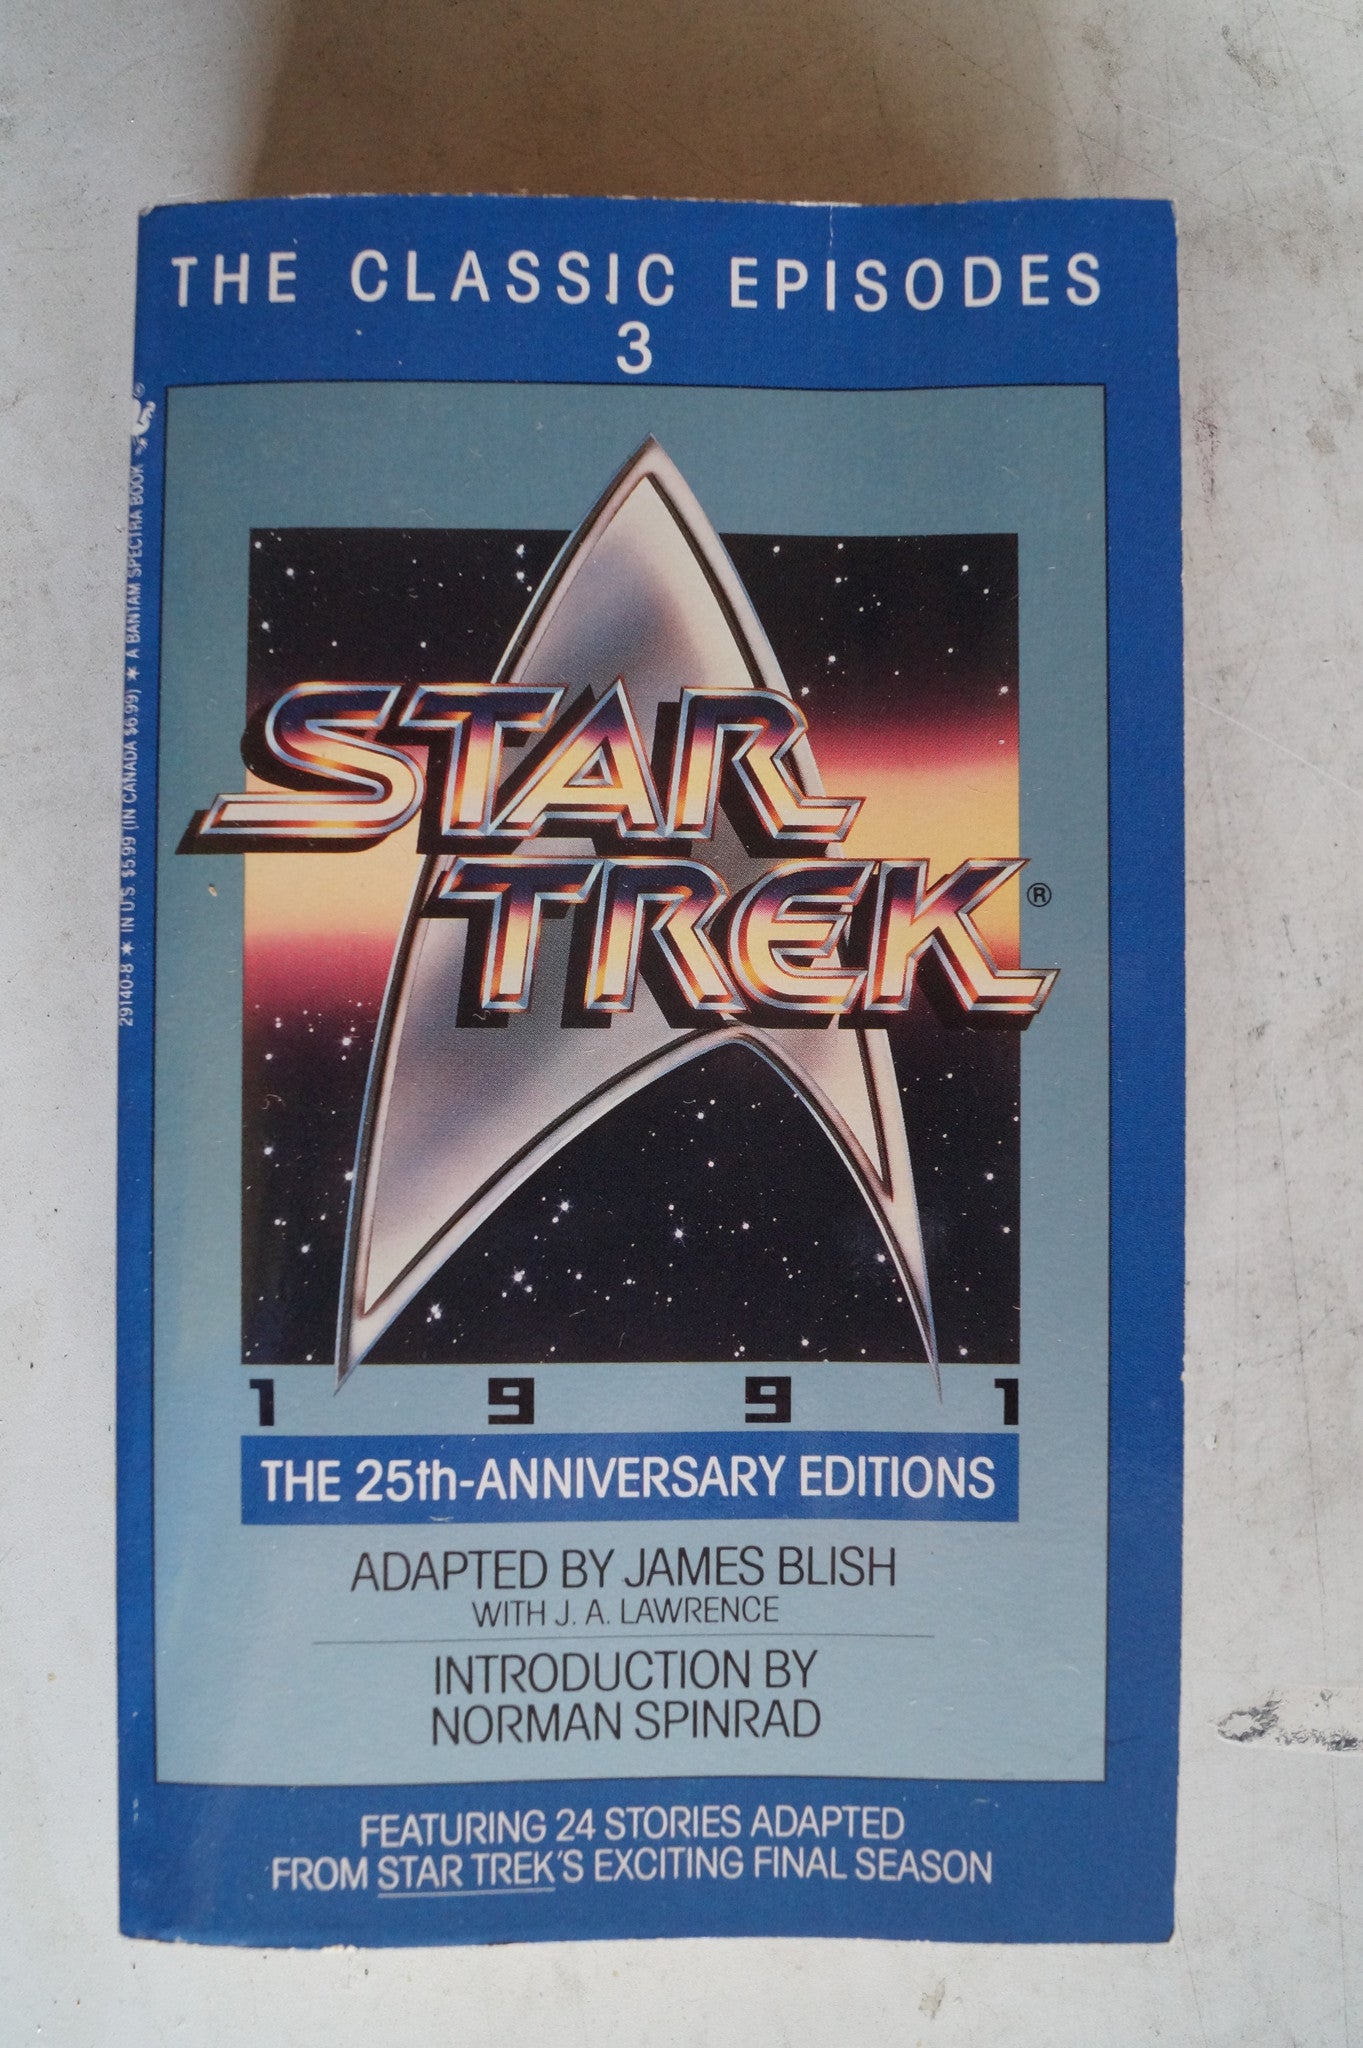 25th Anniversary Editions of James Blish Star Trek Novels